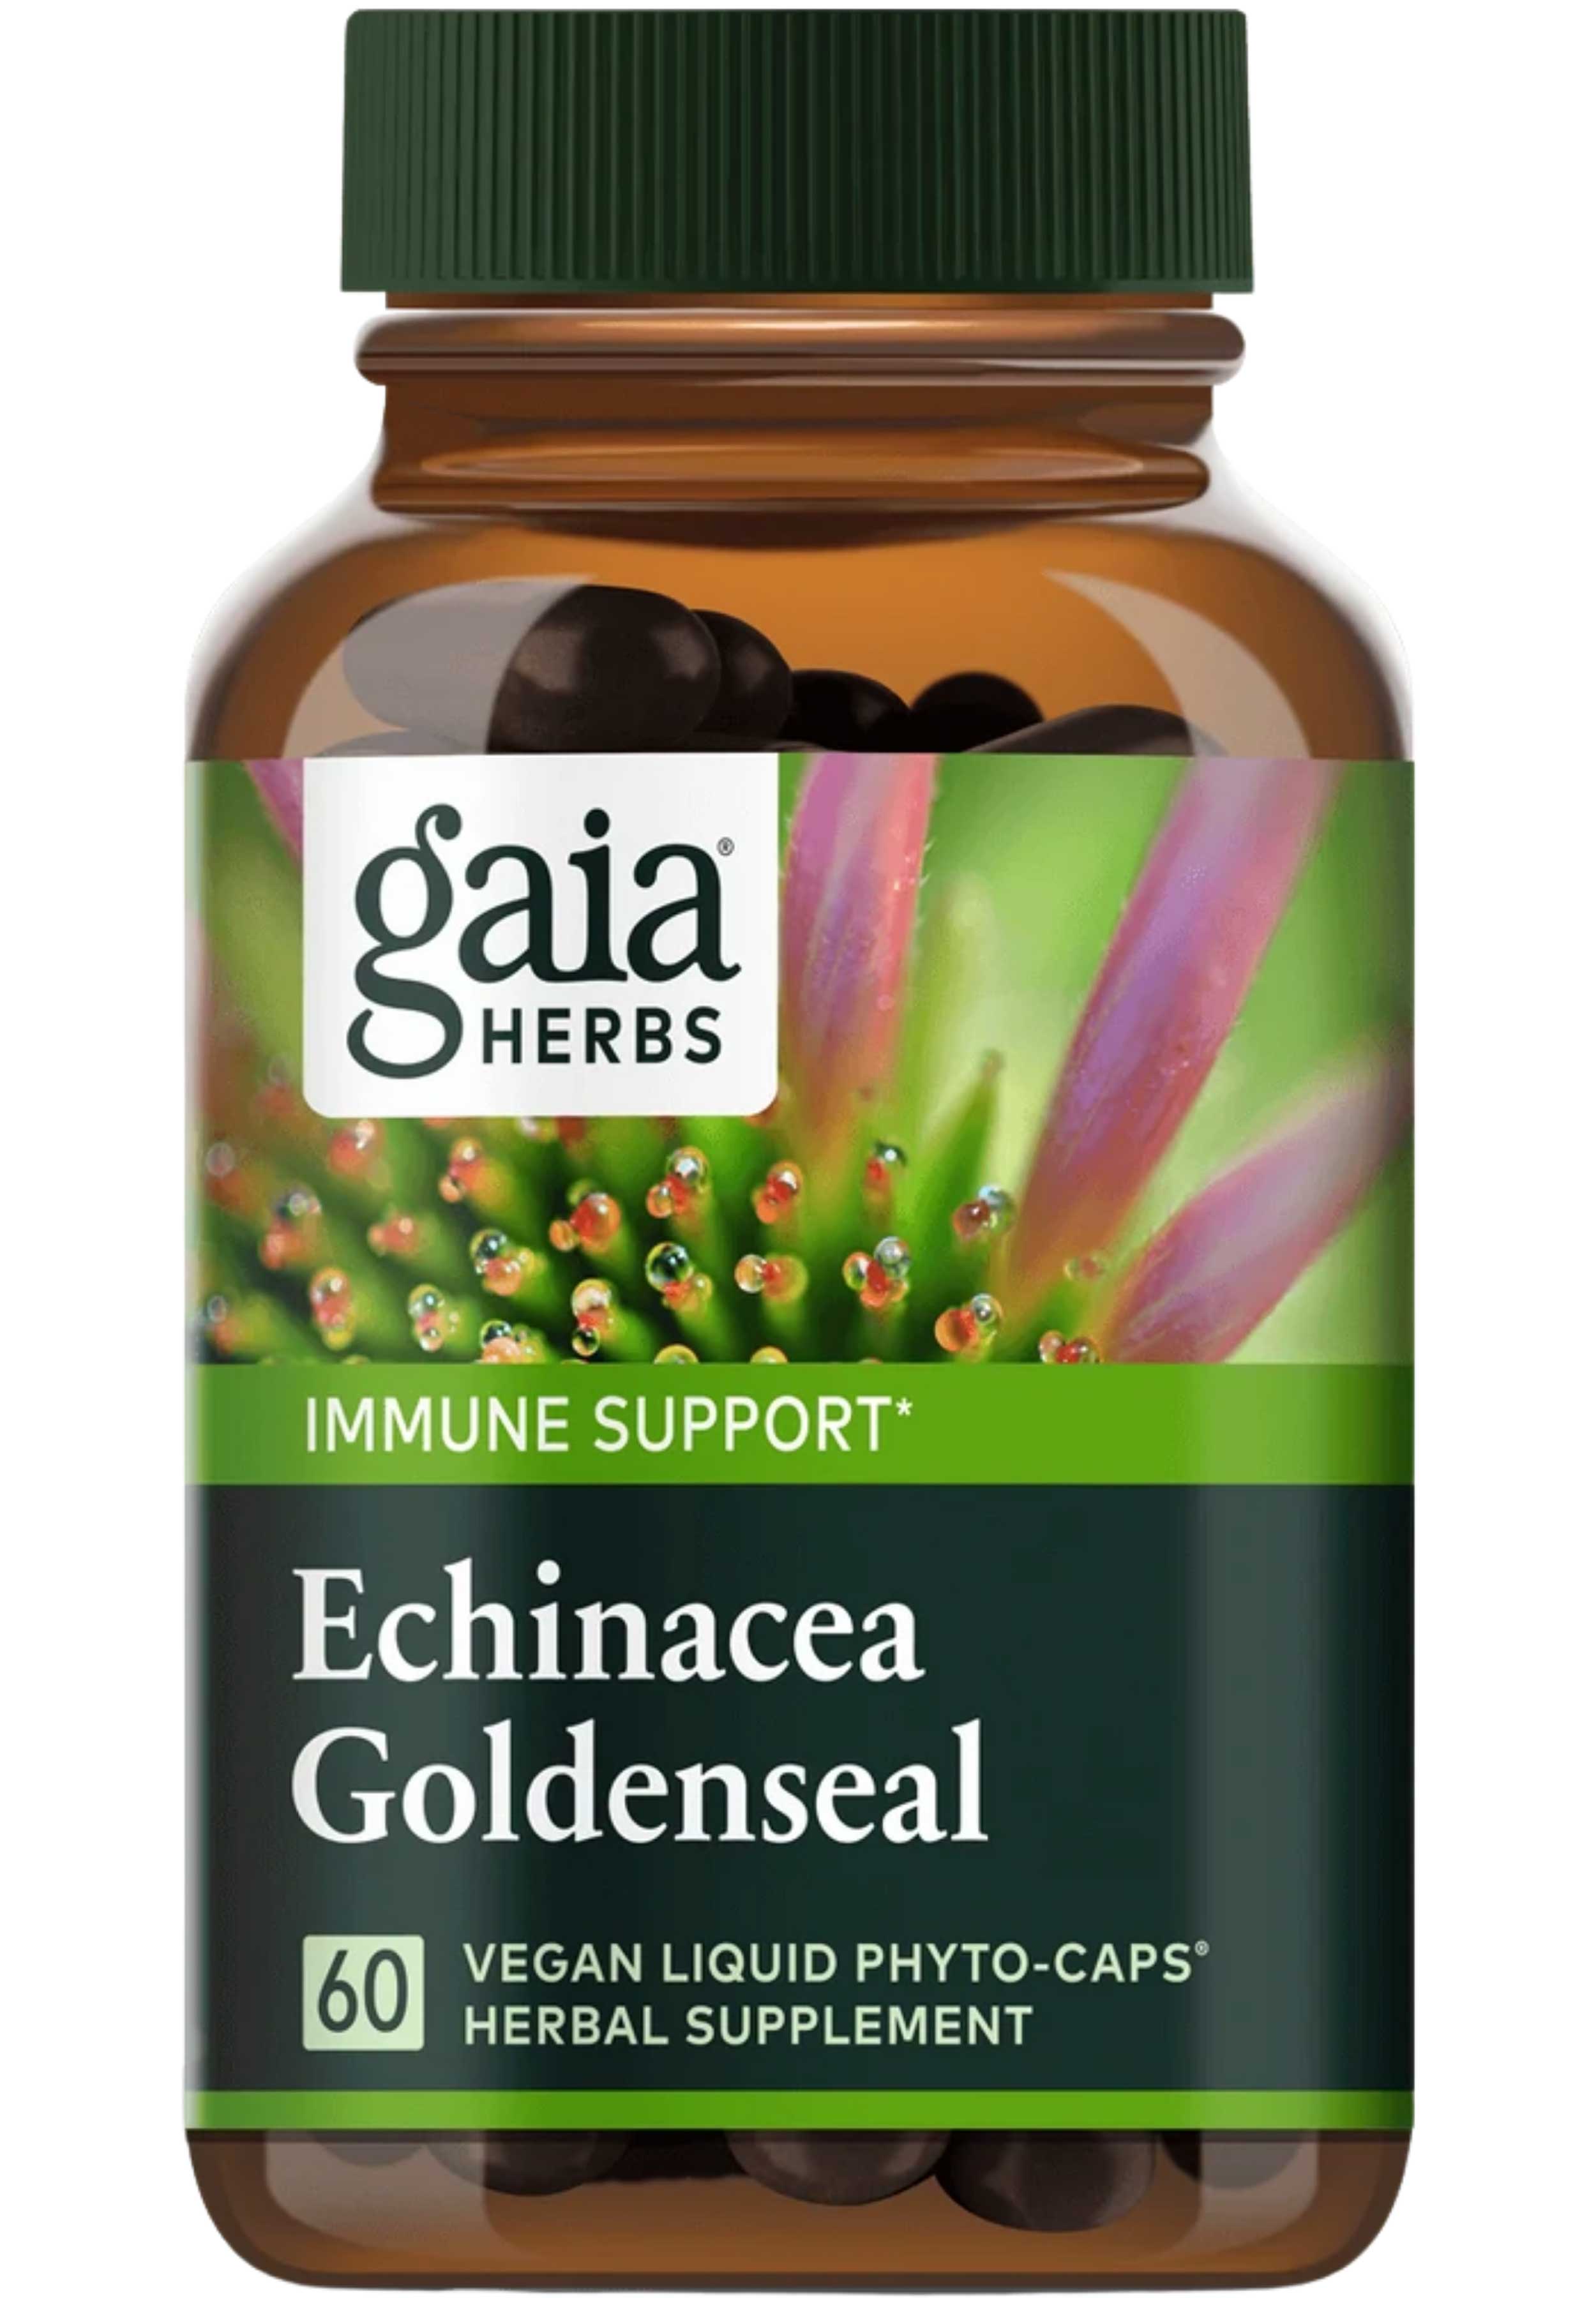 Gaia Herbs Echinacea Goldenseal Capsules